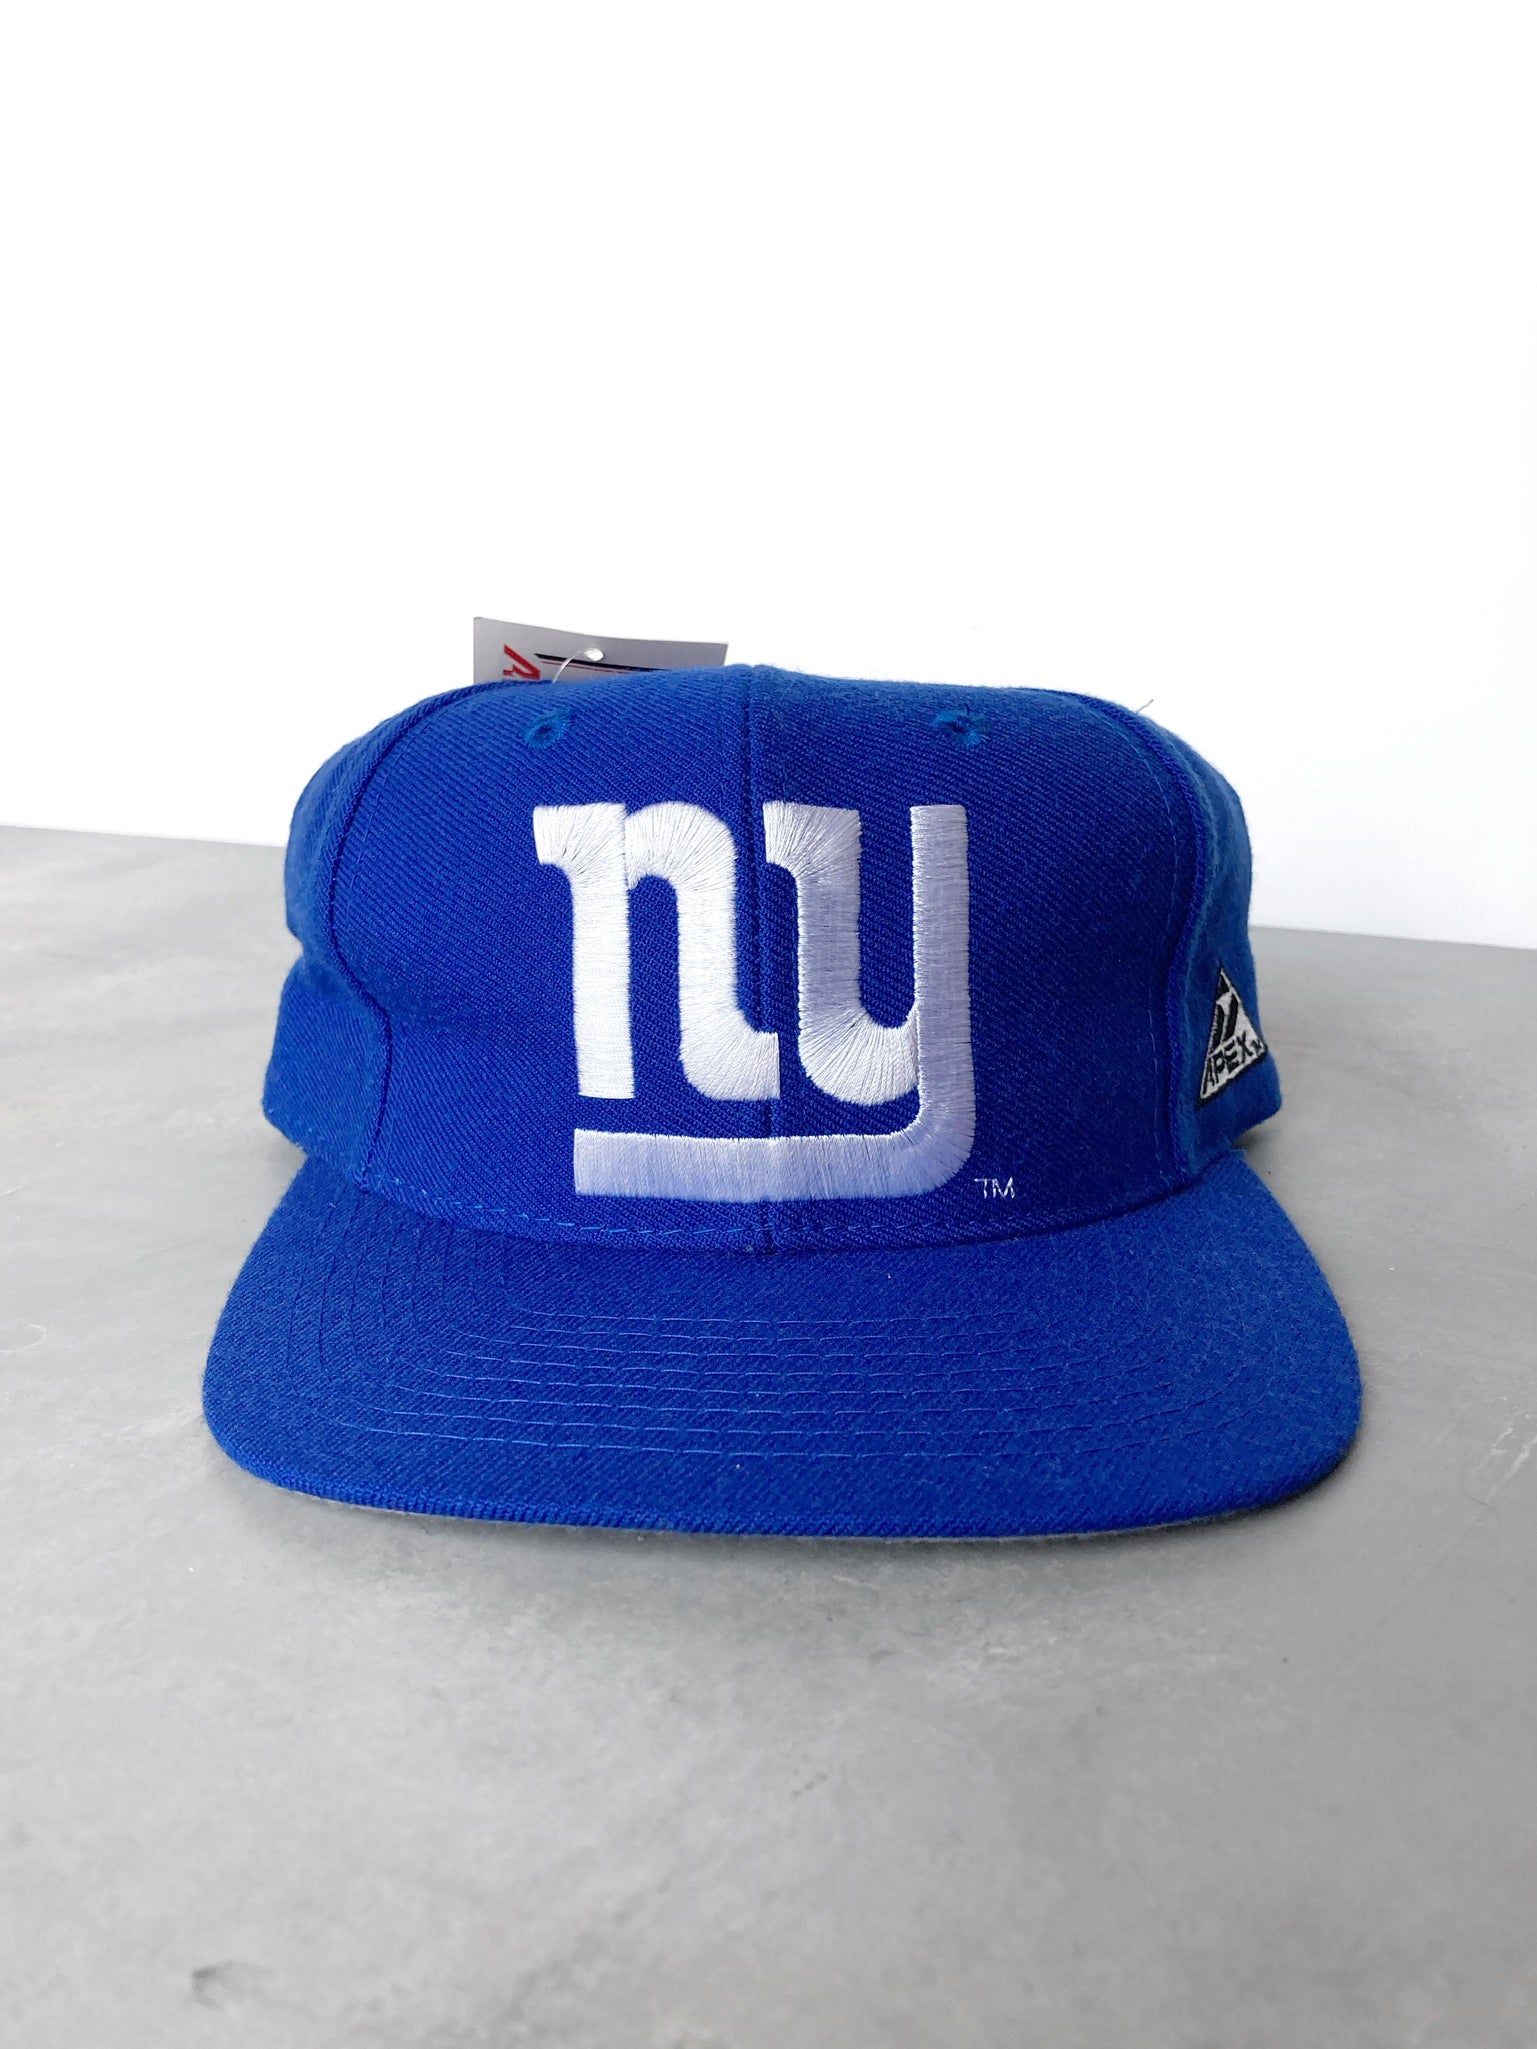 New York Giants Hat 90's – Lot 1 Vintage